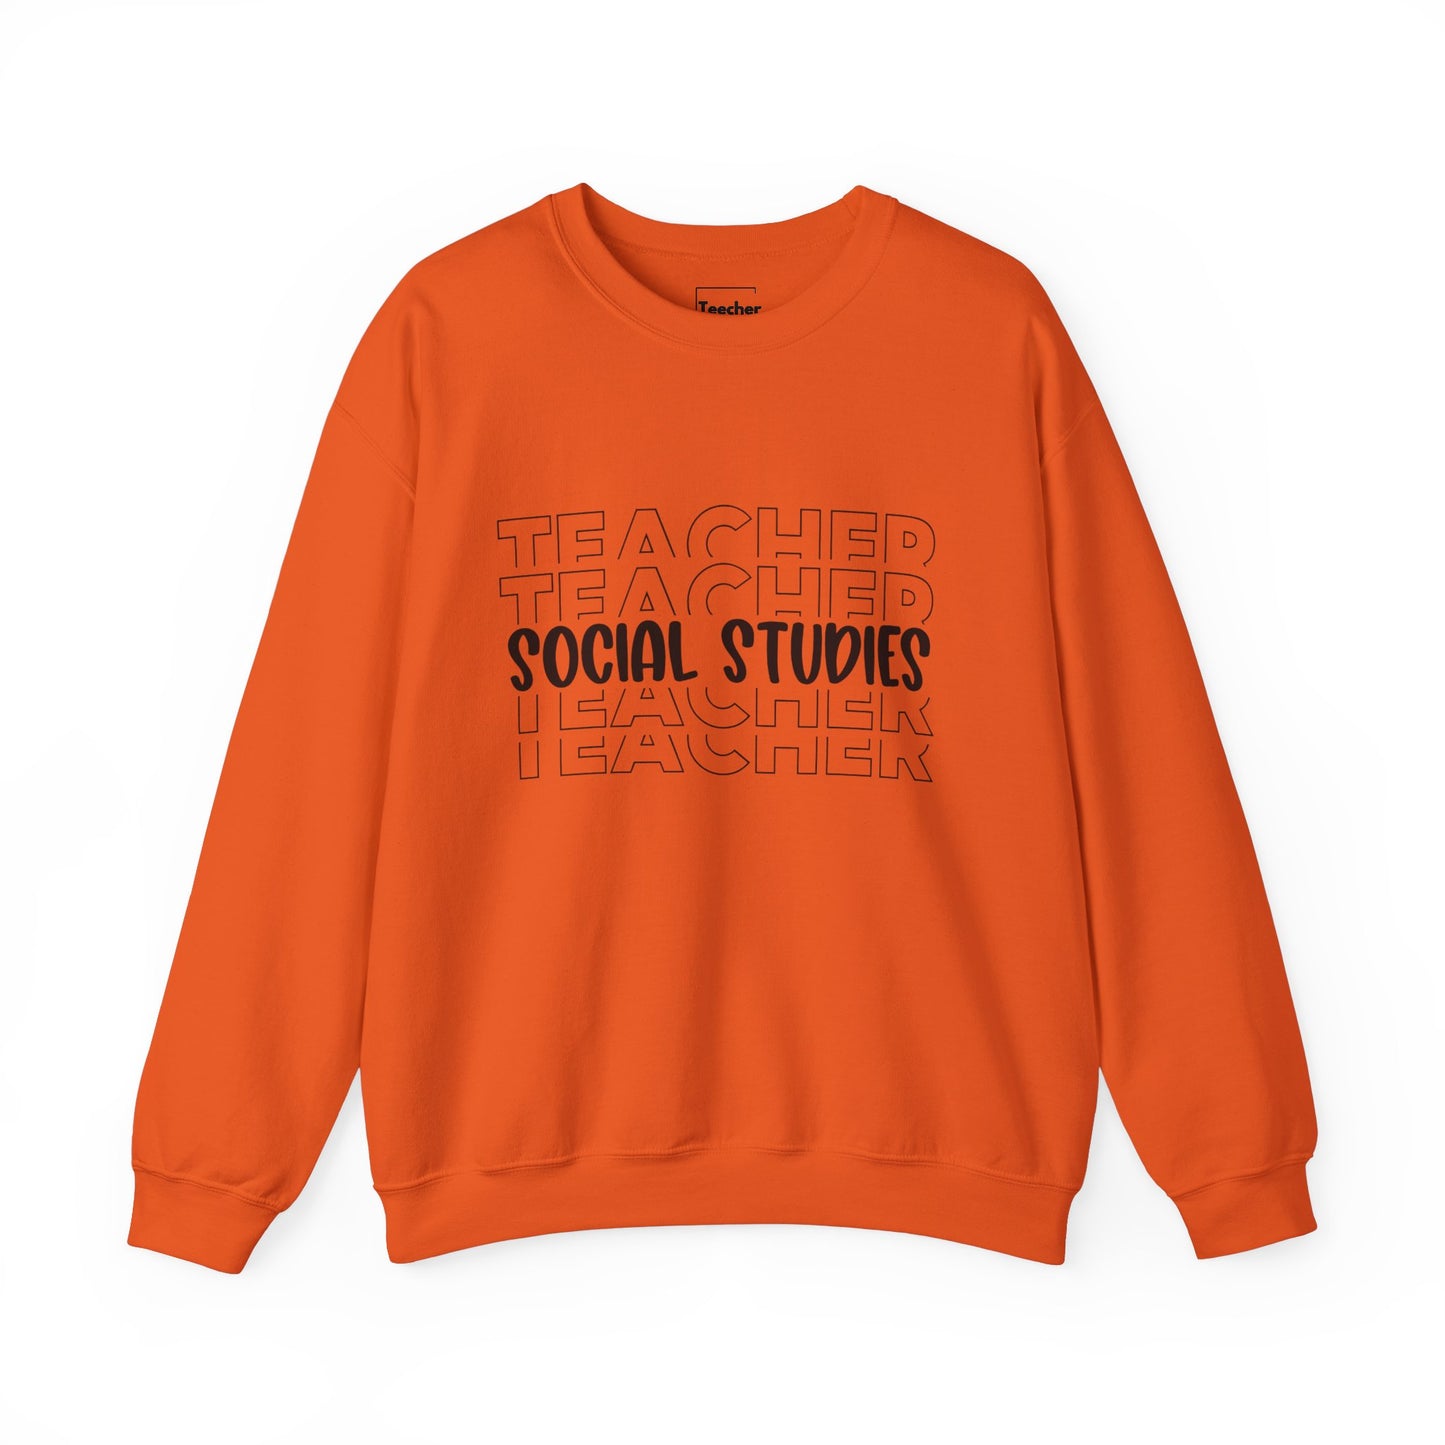 Social Studies Teacher Sweatshirt